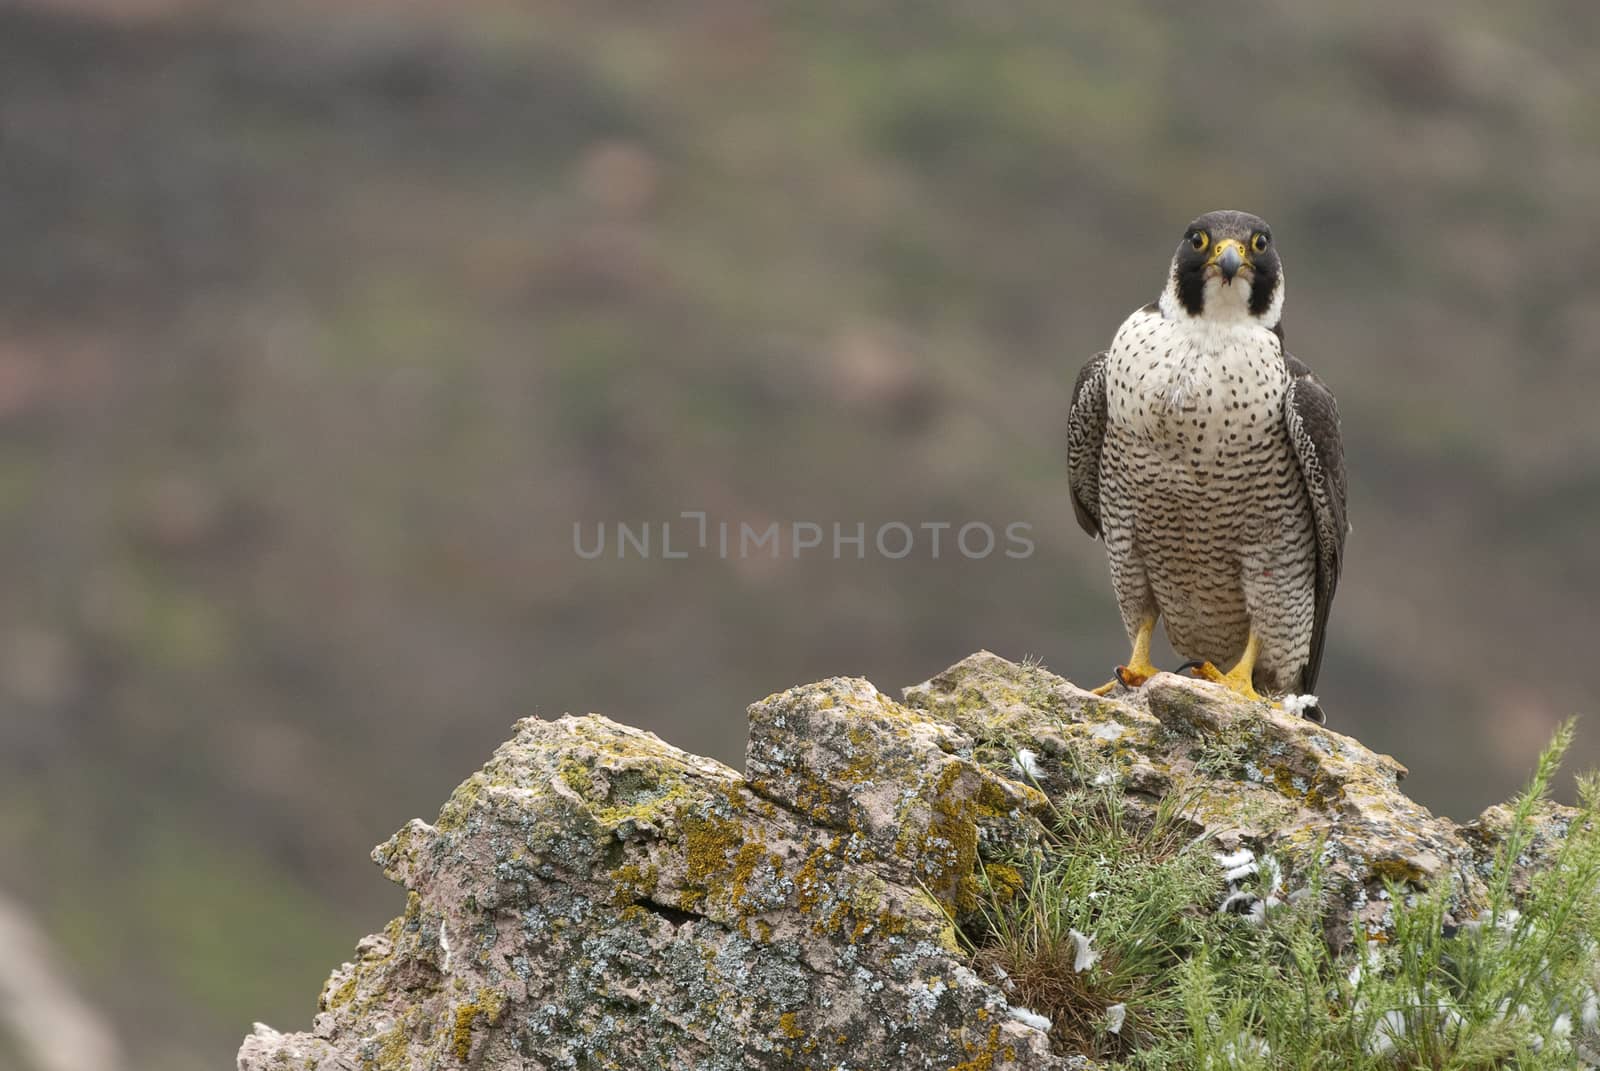 Peregrine falcon on the rock. Bird of prey, female portrait, Fal by jalonsohu@gmail.com